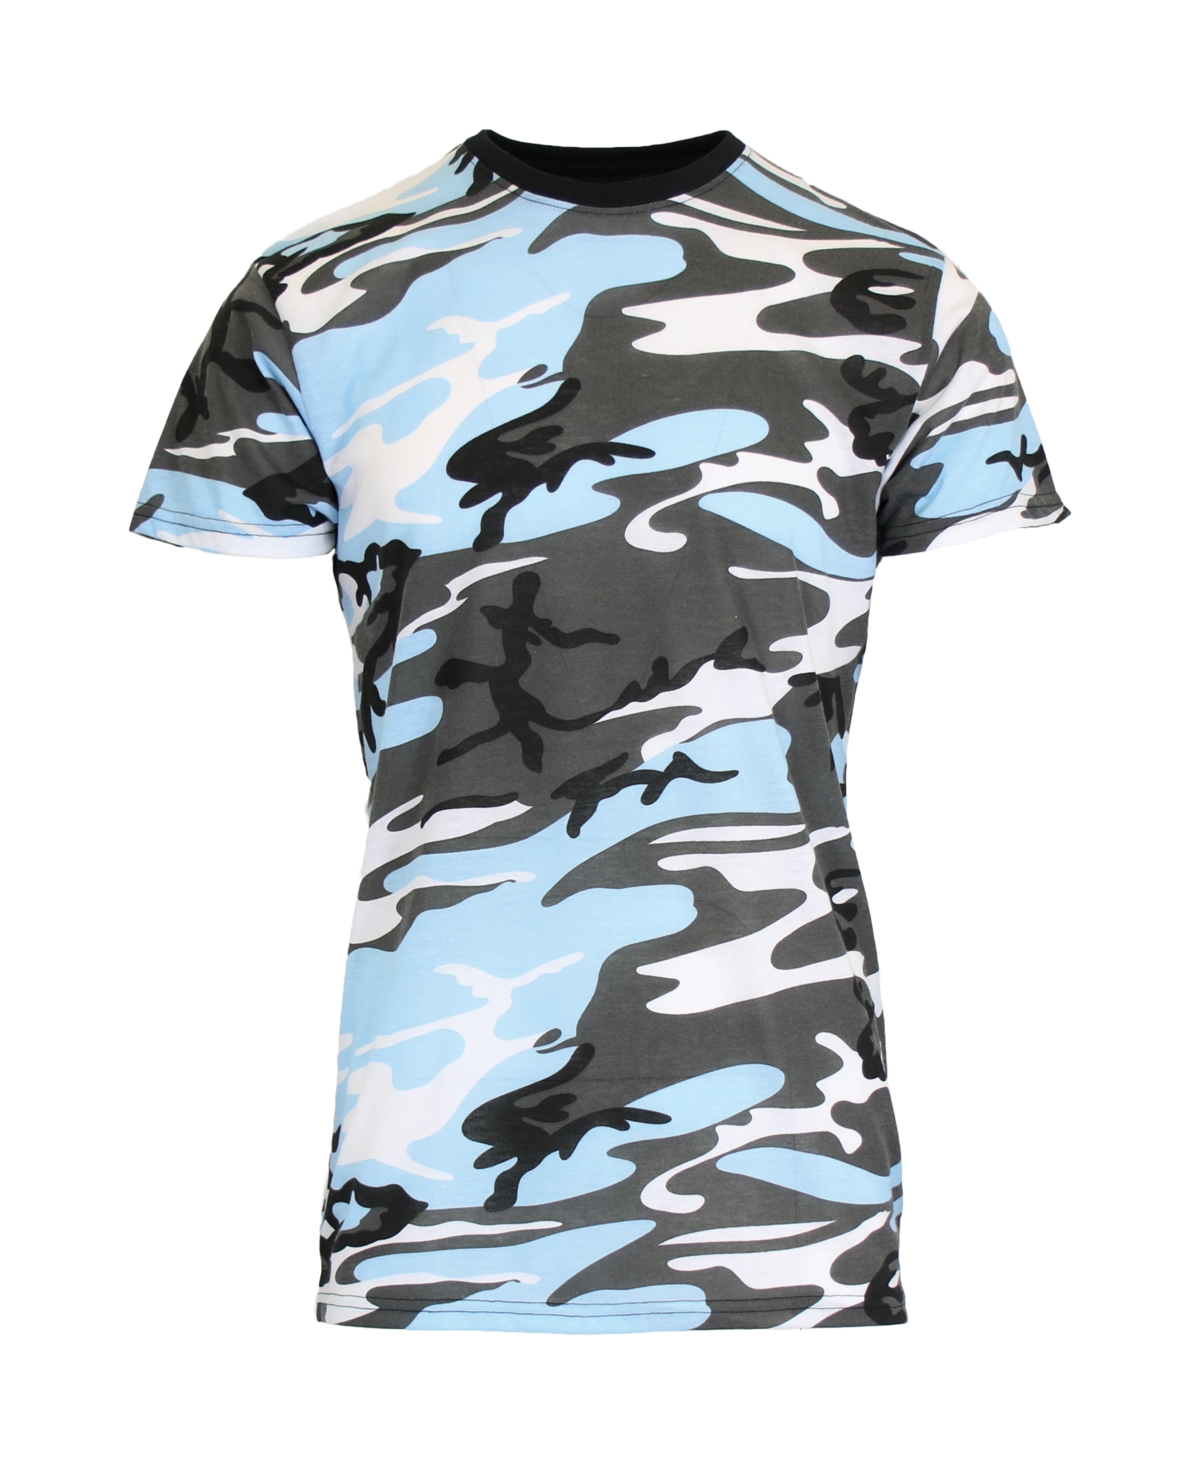 Men's Camo Printed Short Sleeve Crew Neck T-shirt - Mint Camo